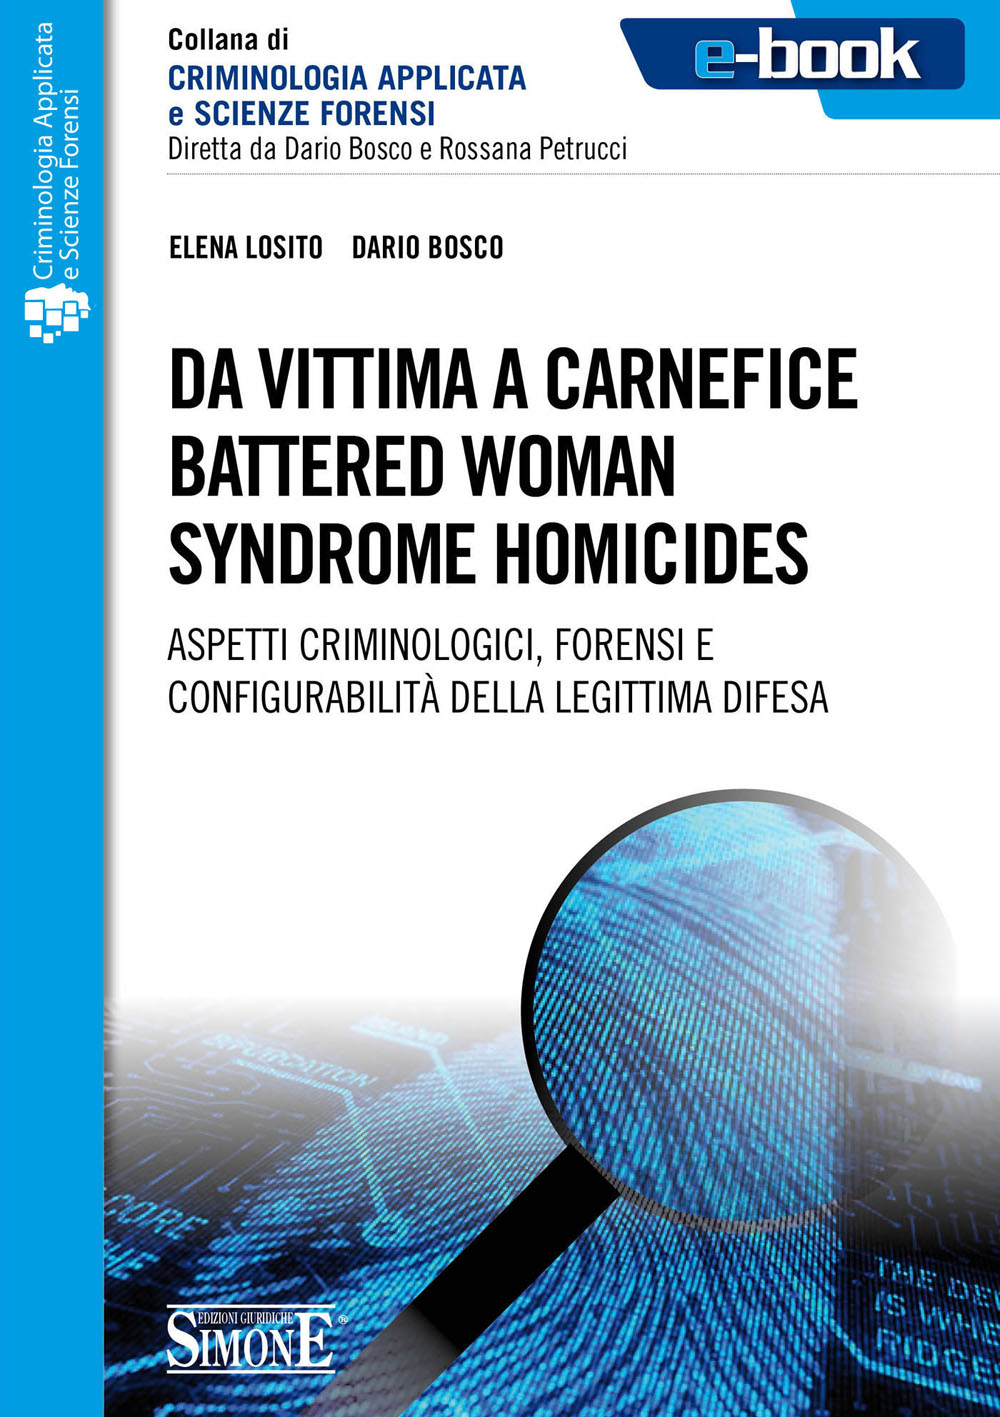 [Ebook] Da vittima a carnefice - Battered woman - Syndrome homicides